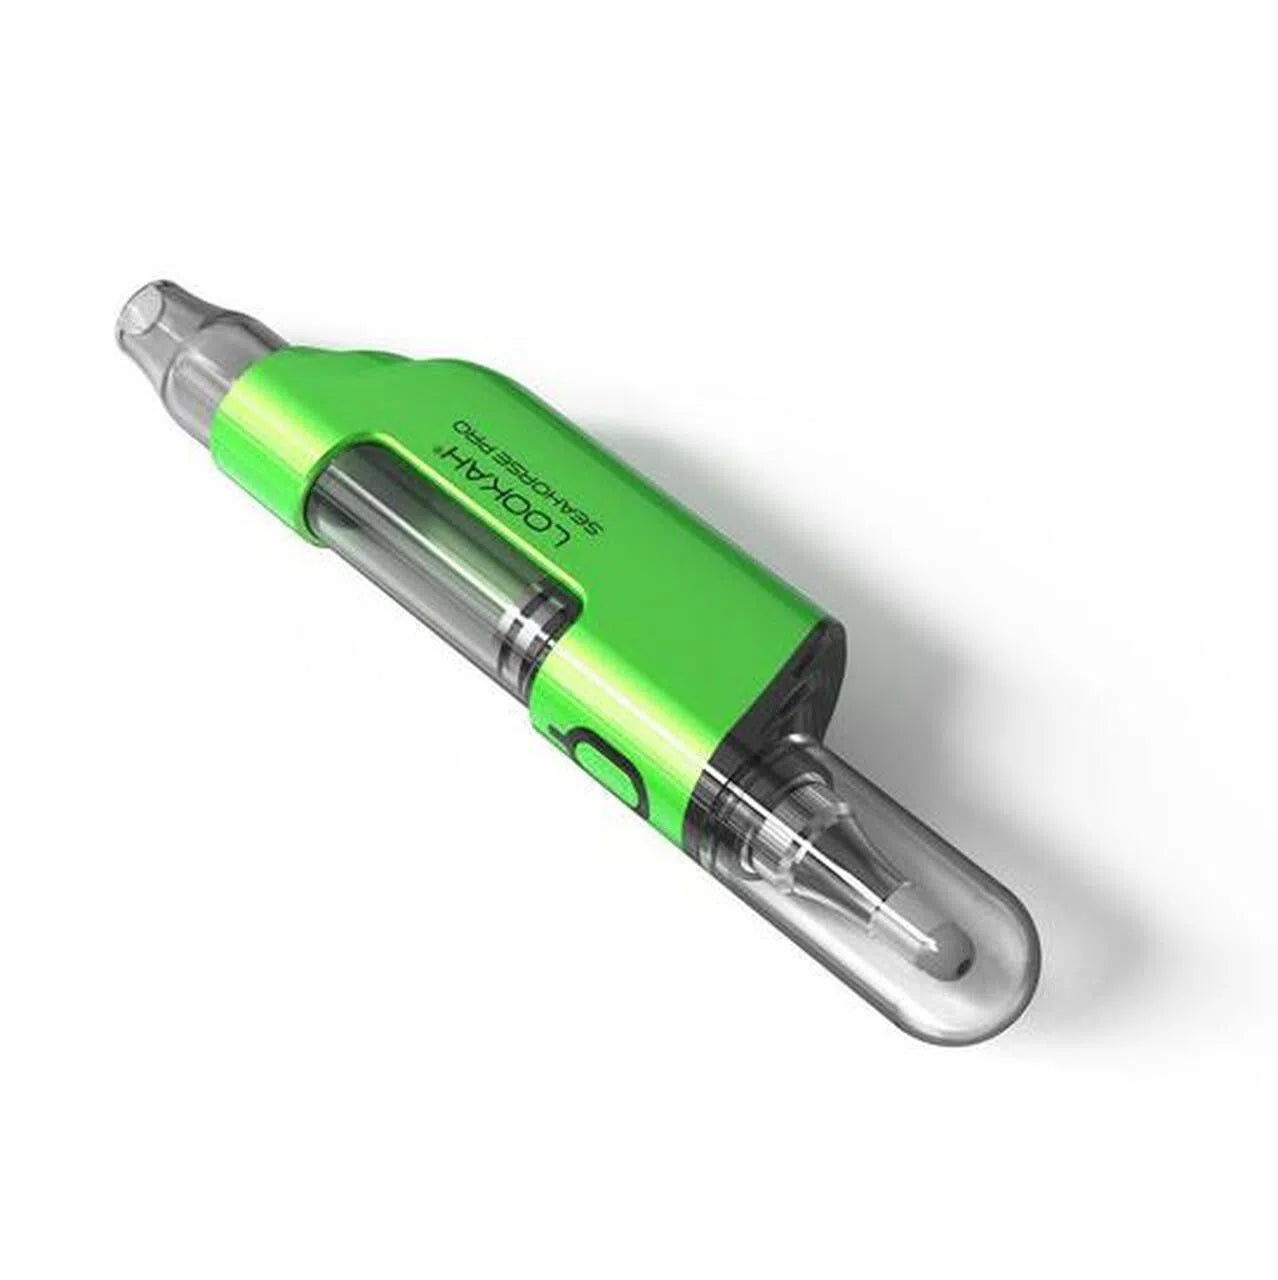 Lookah Seahorse Pro Electric Nectar Collector Kit & Wax Pen Vaporizer-Lookah-Green-NYC Glass